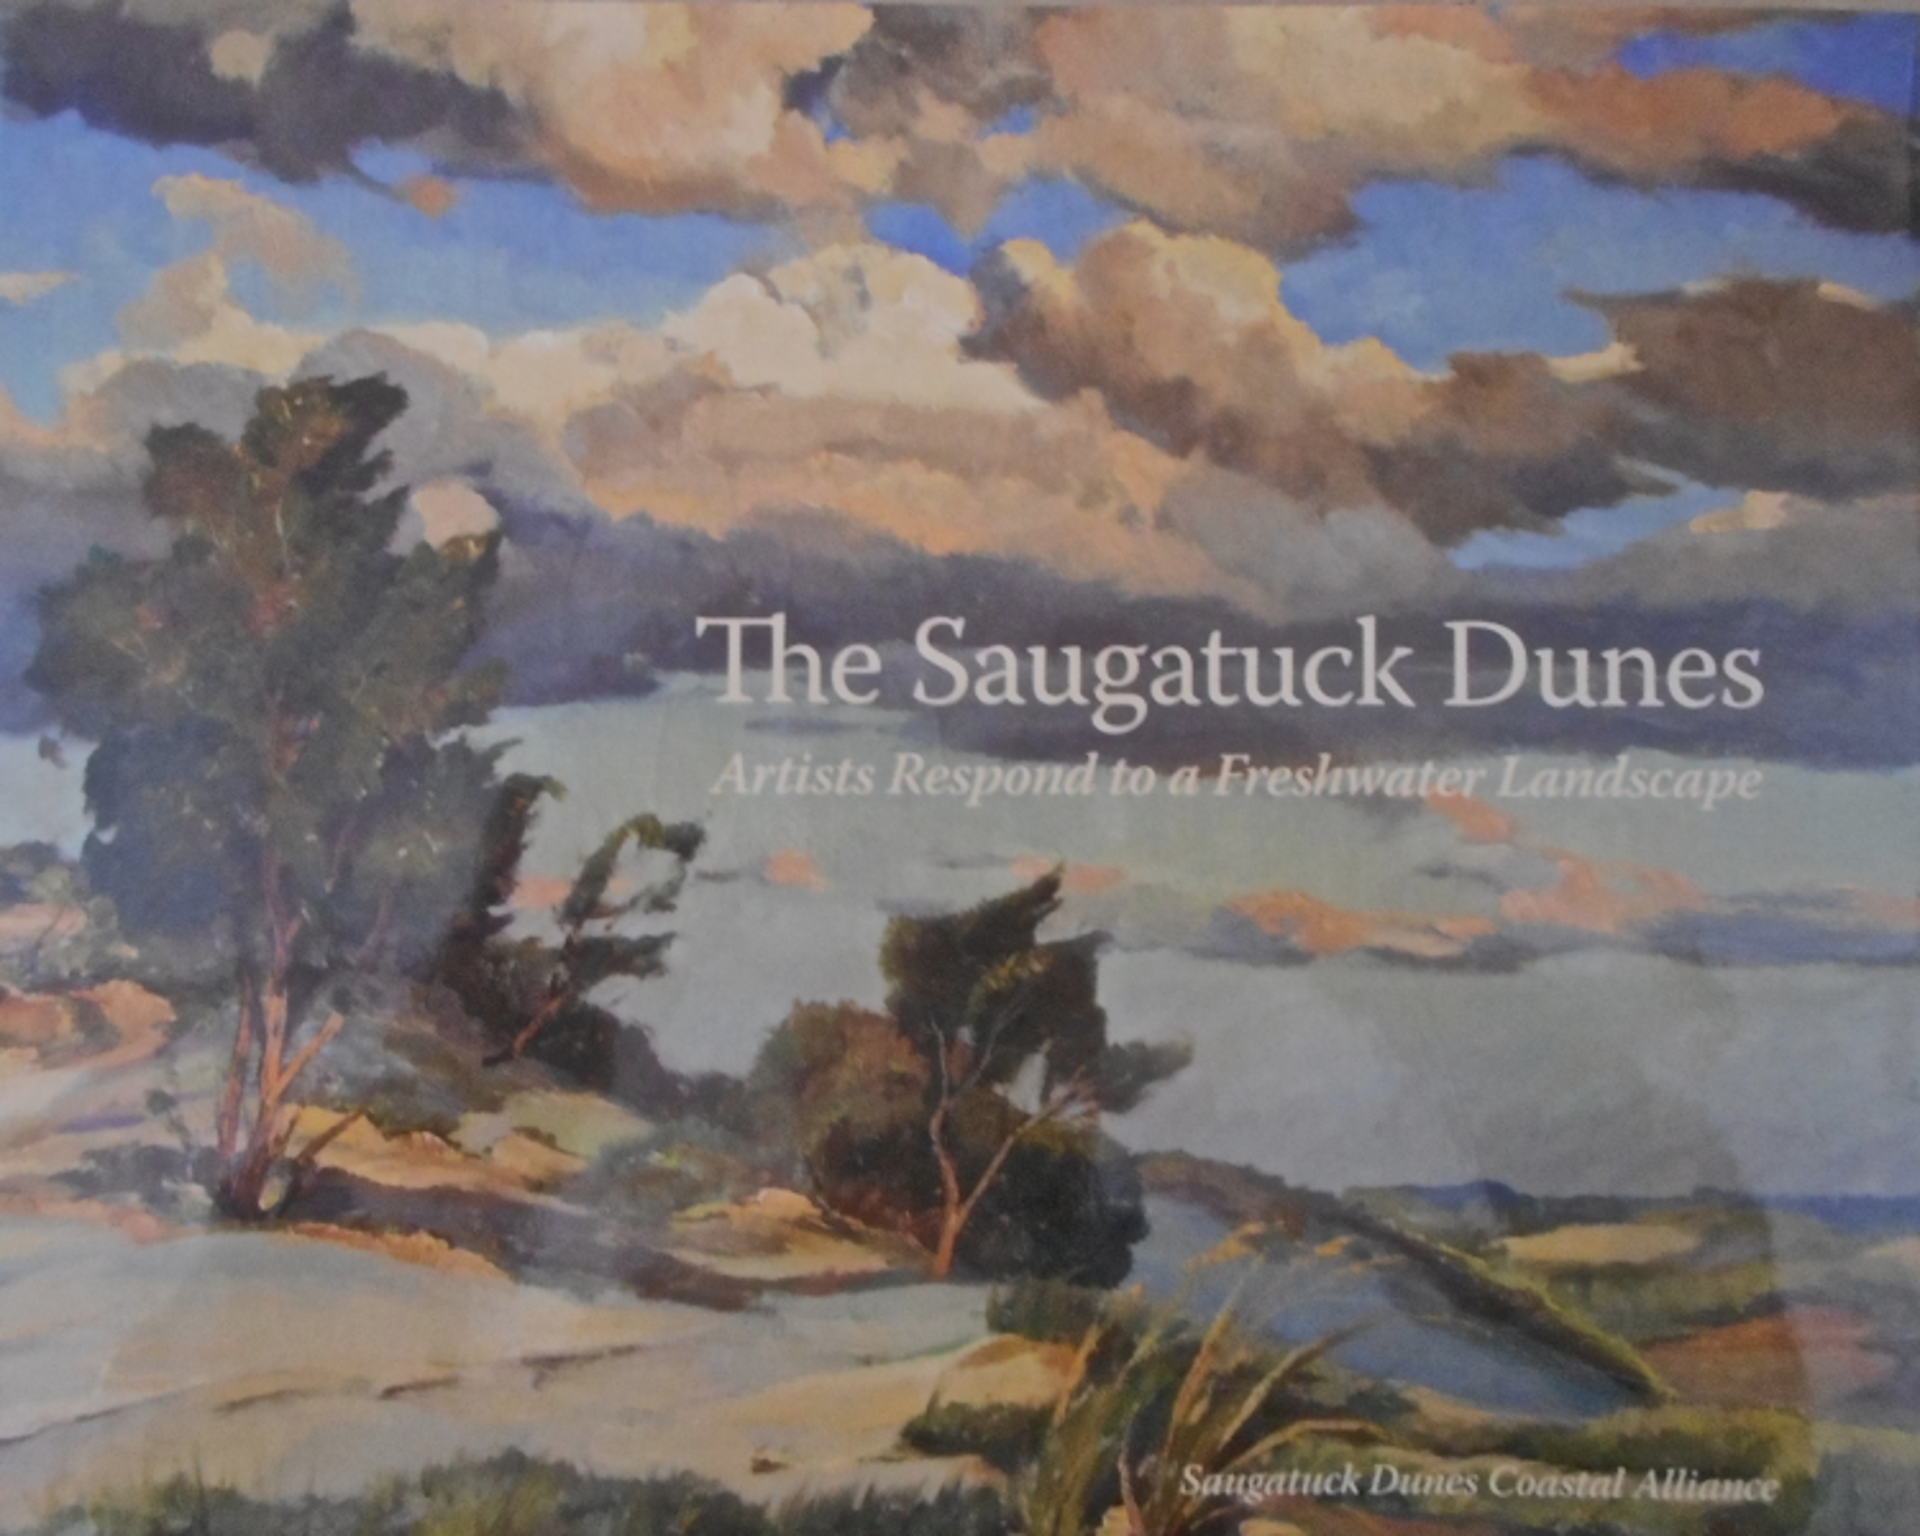 The Saugatuck Dunes